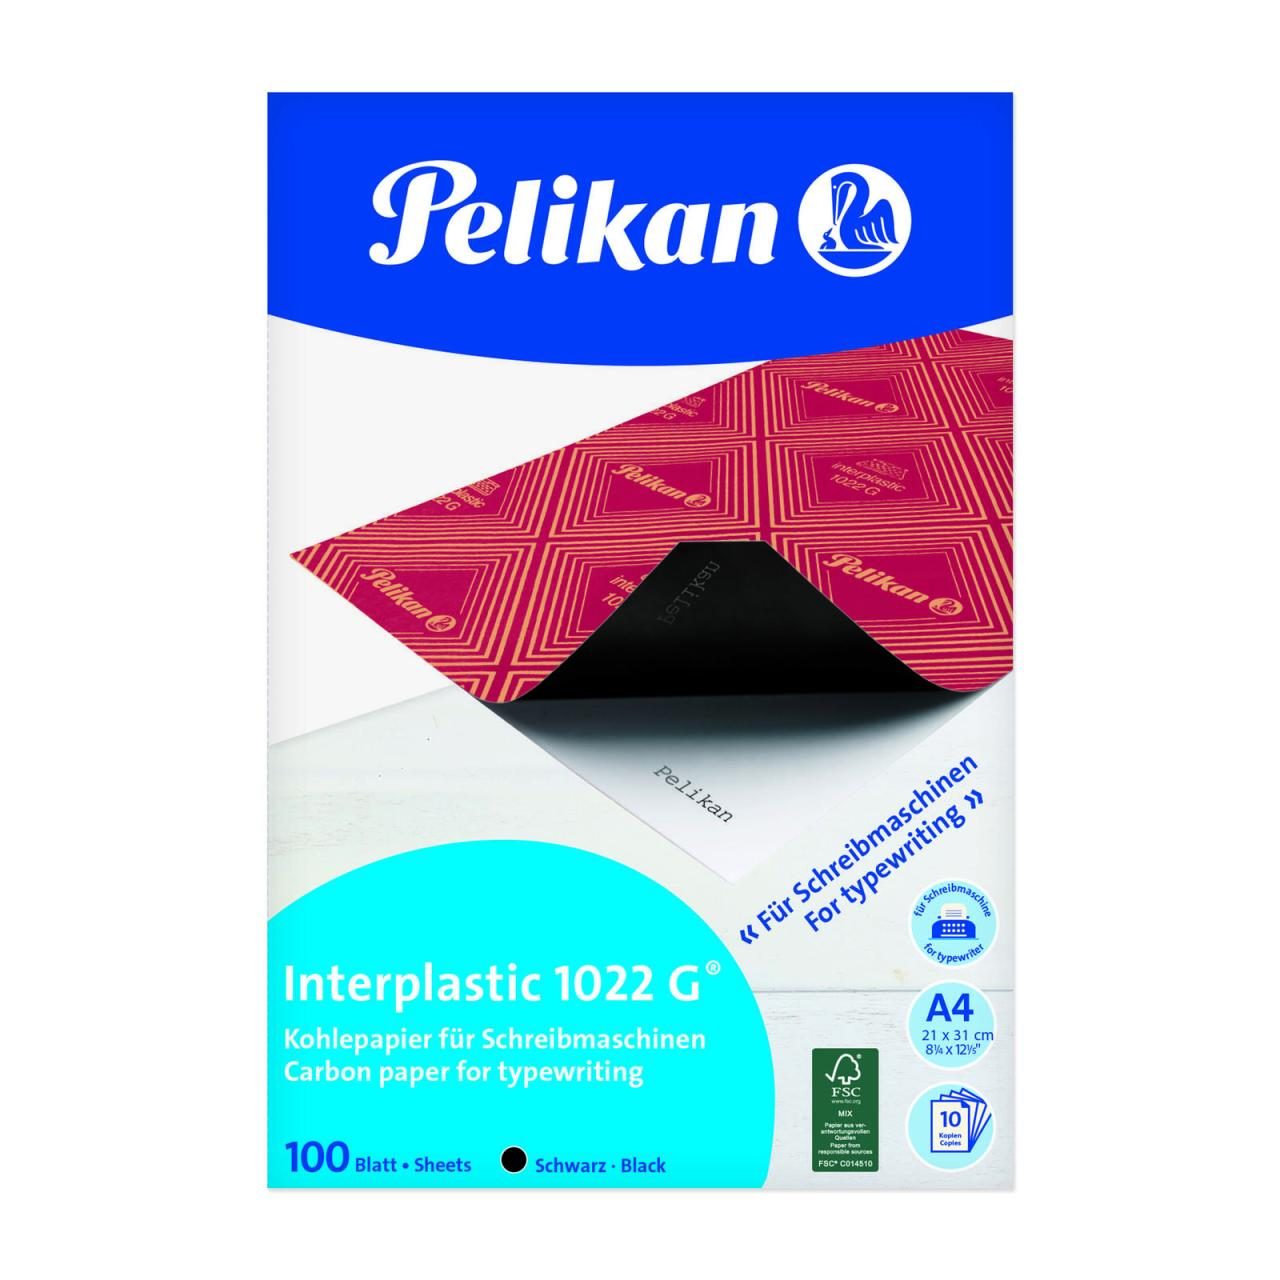 Pelikan Kohlepapier interplastic 1022 G® 40440 schwarz von Pelikan